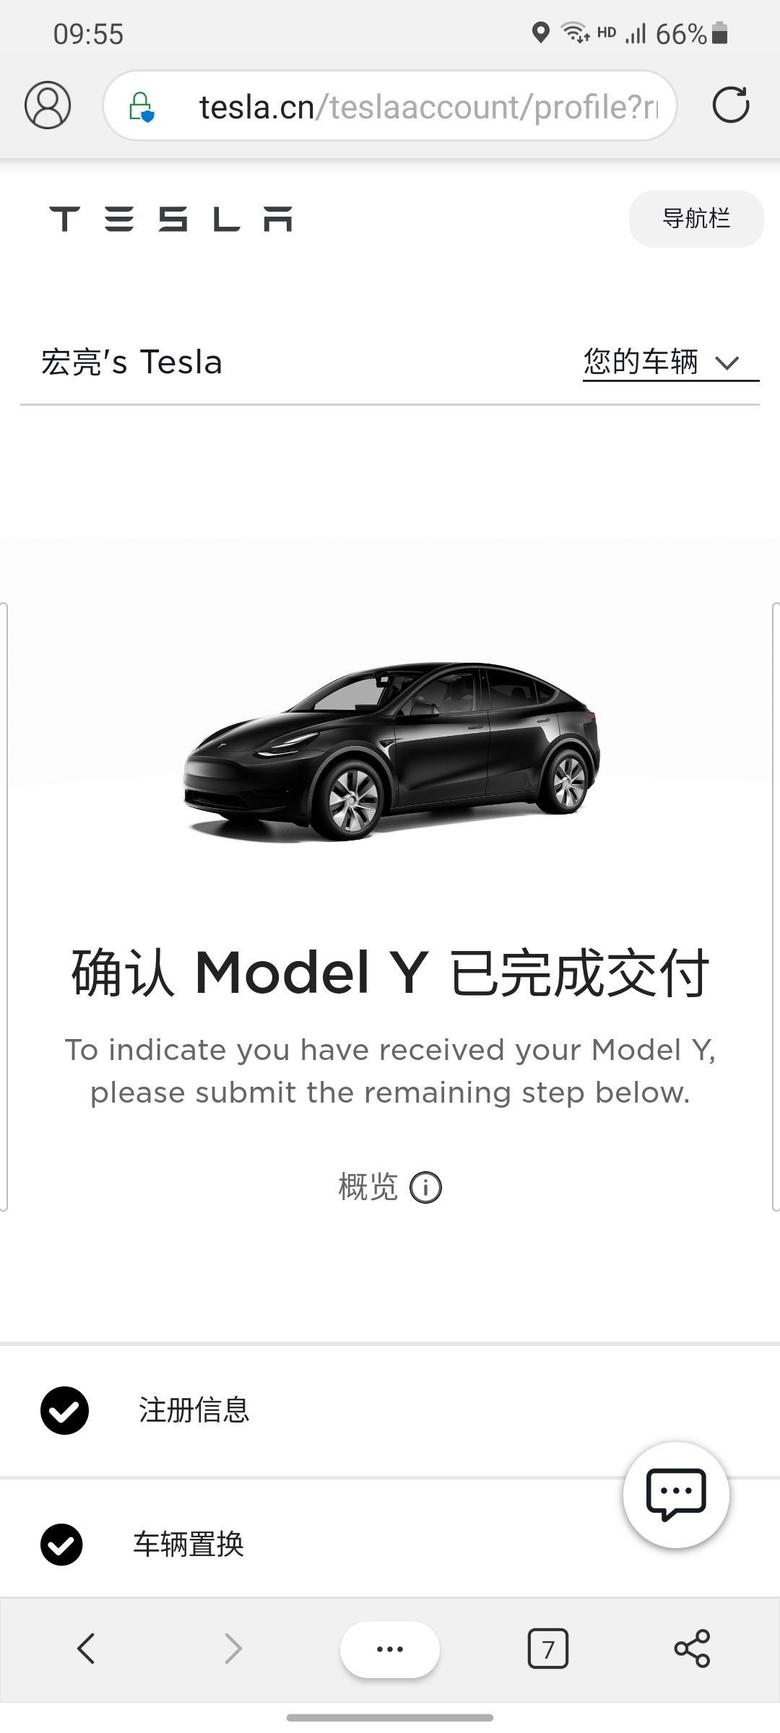 model y 等待了2个月终于可以换新车可